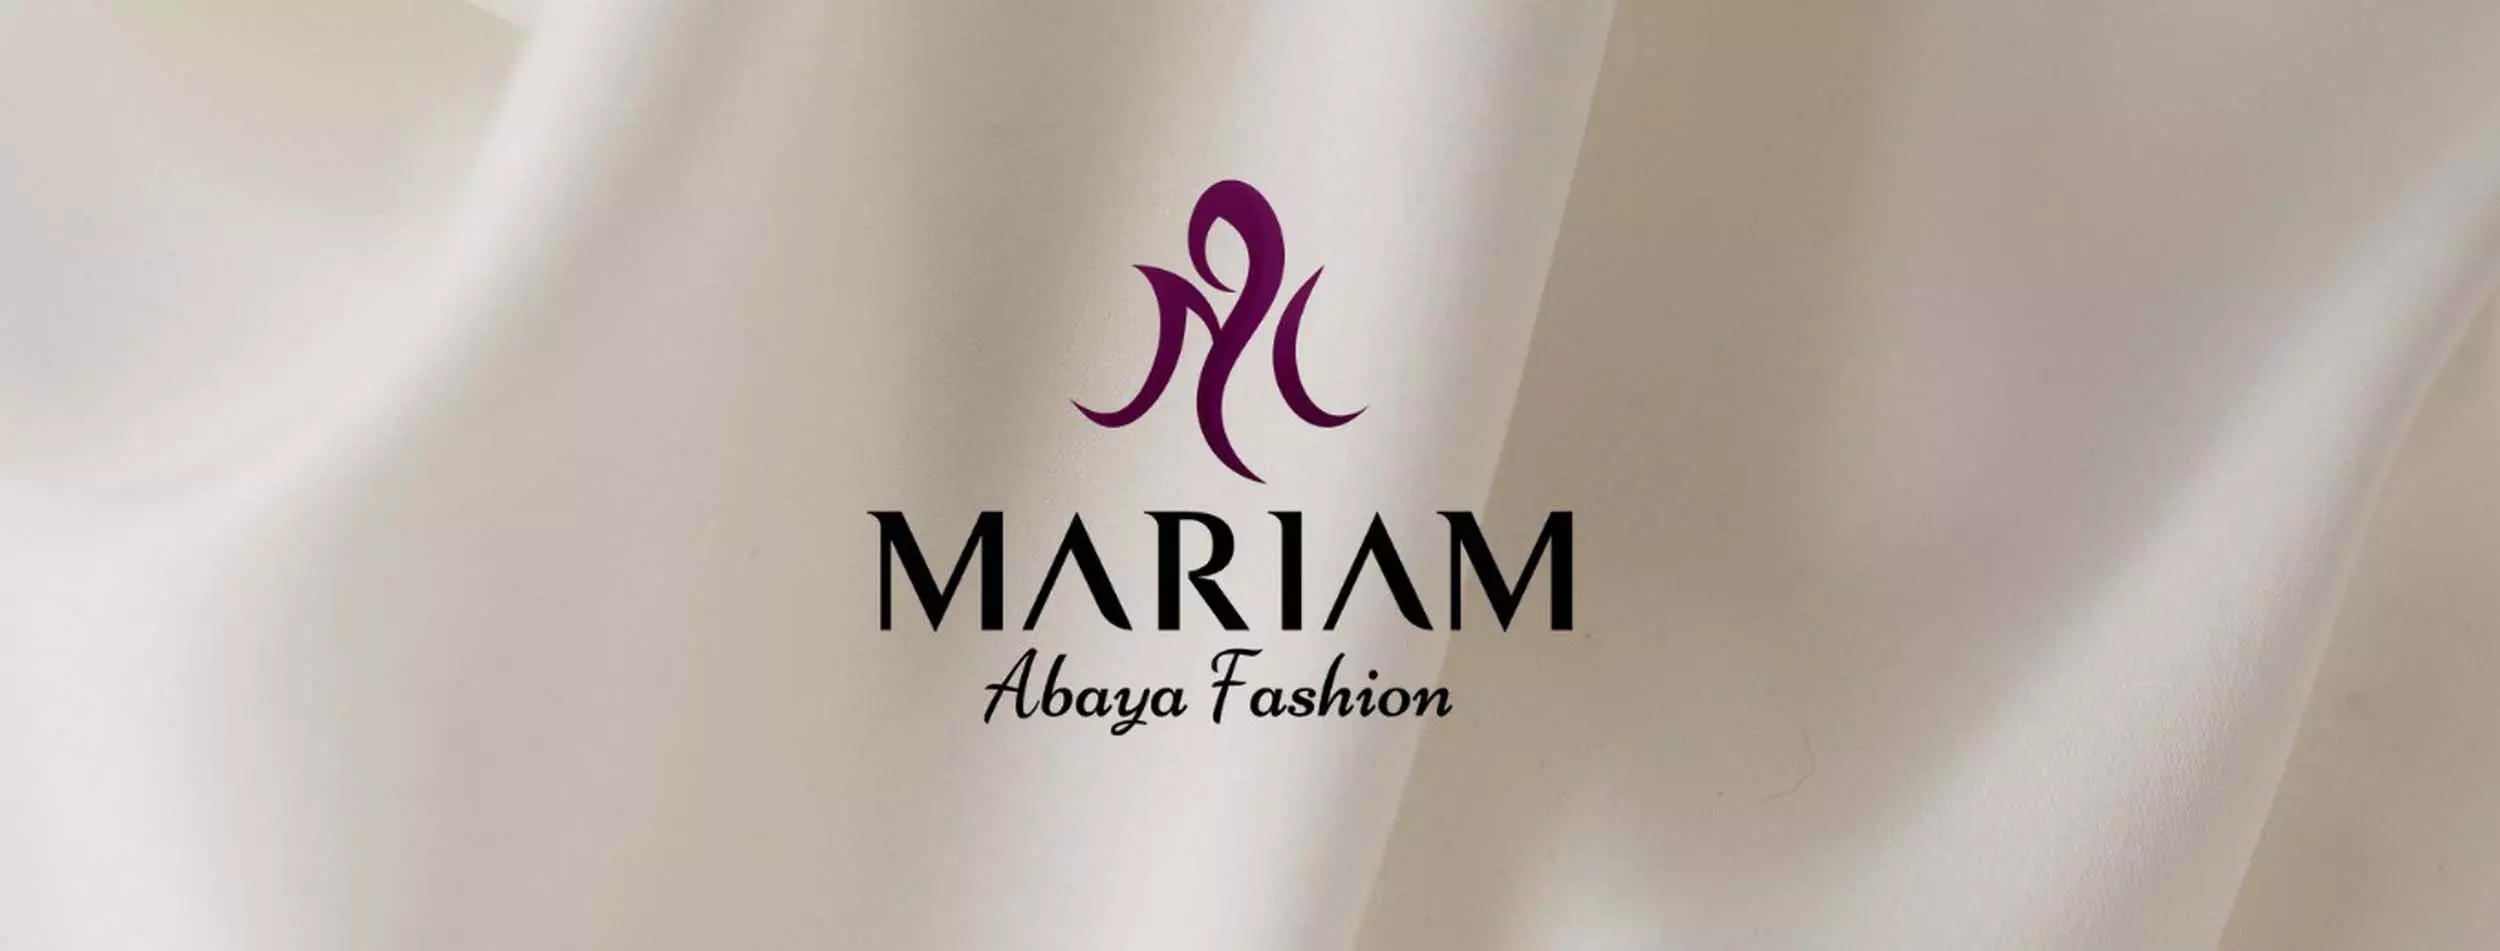 banner image for Mariam Abaya